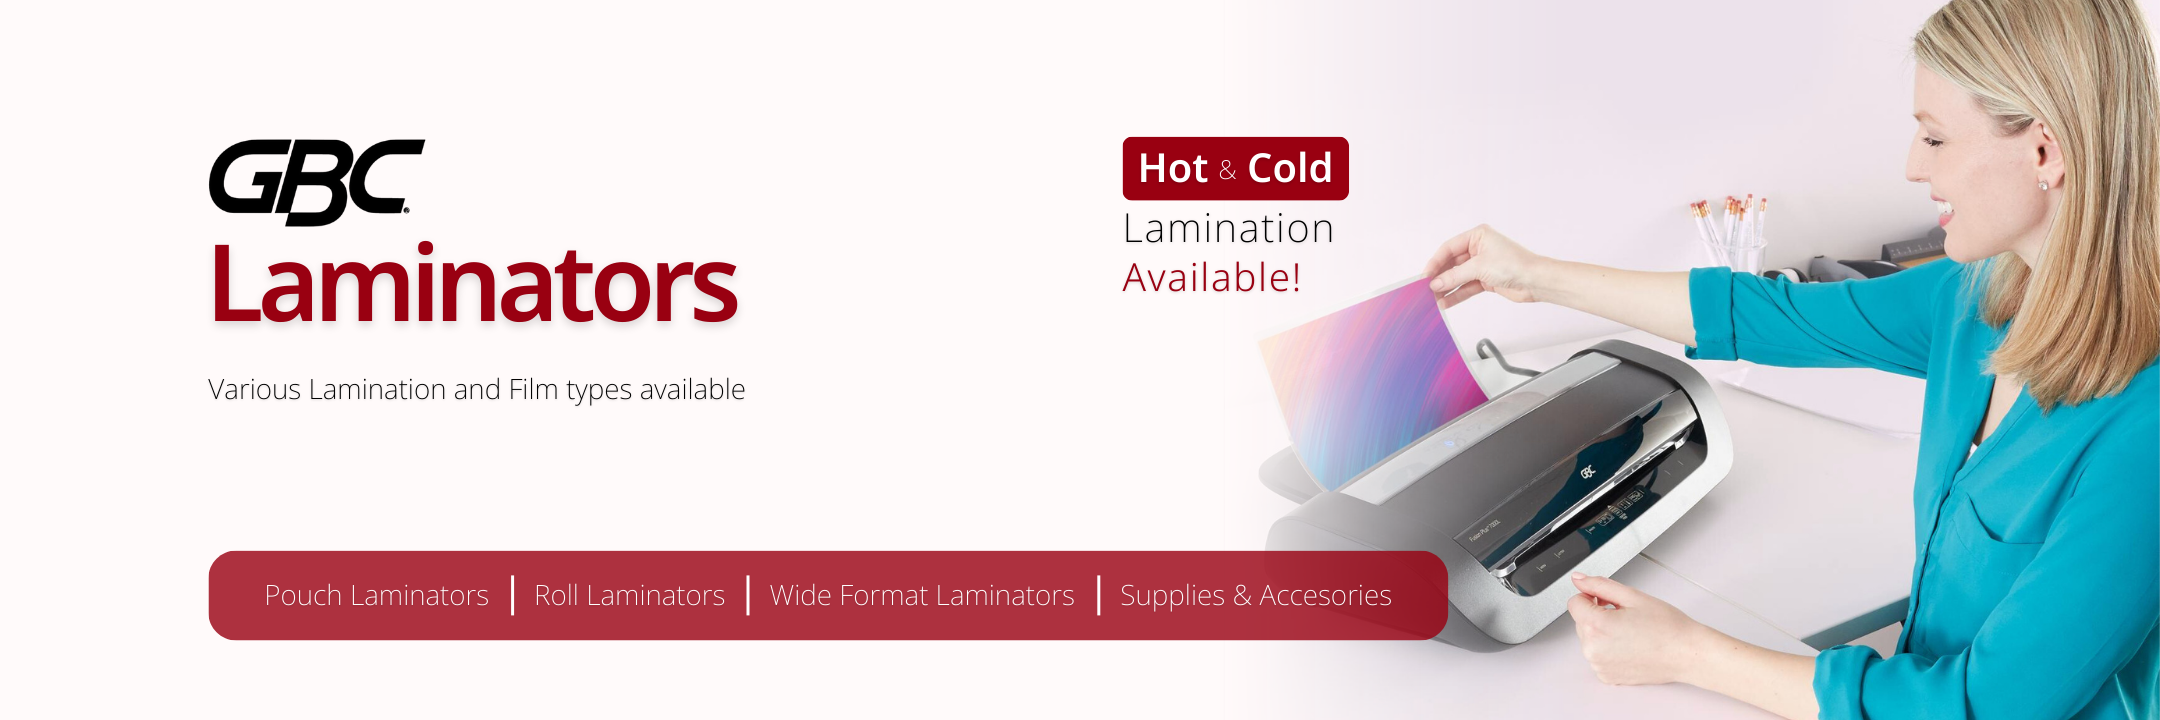 ACCO-GBC-Laminators-Desktop-Carousel-Banner-Slide-3